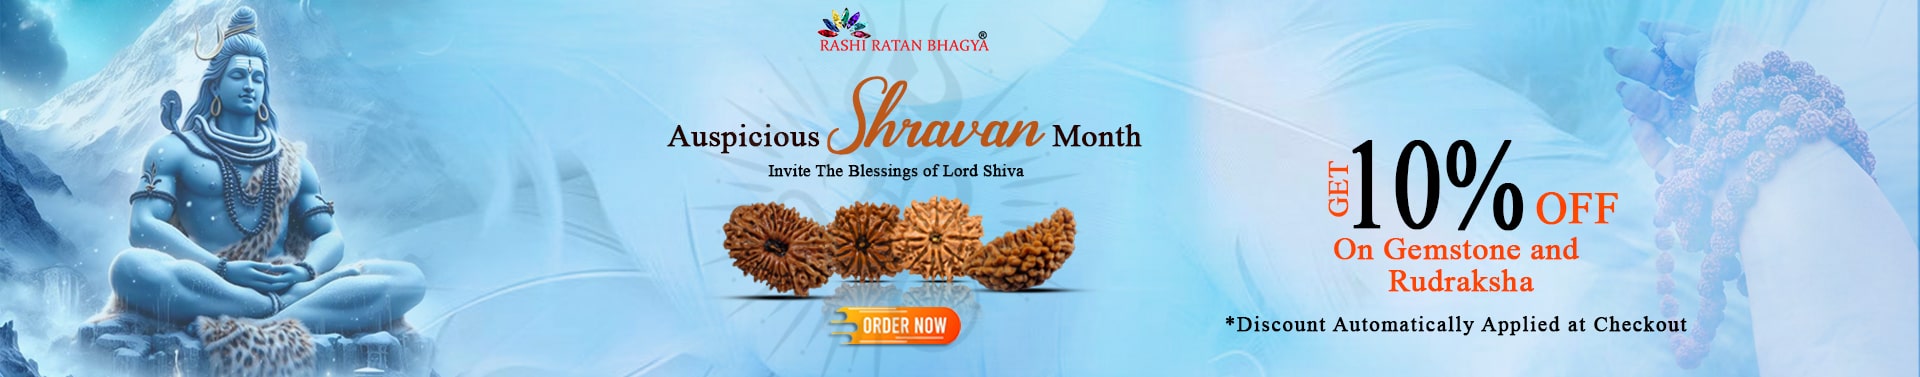 Shravan Month offer - get 10% discount